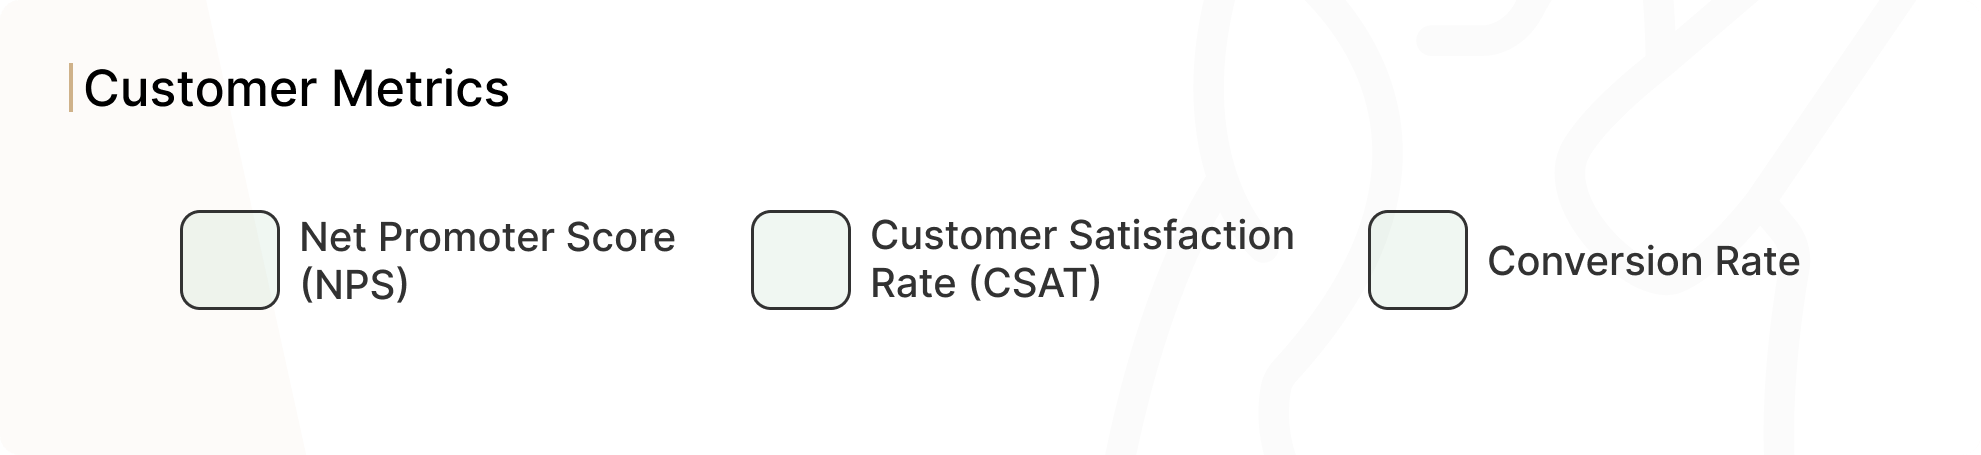 Customer Metrics